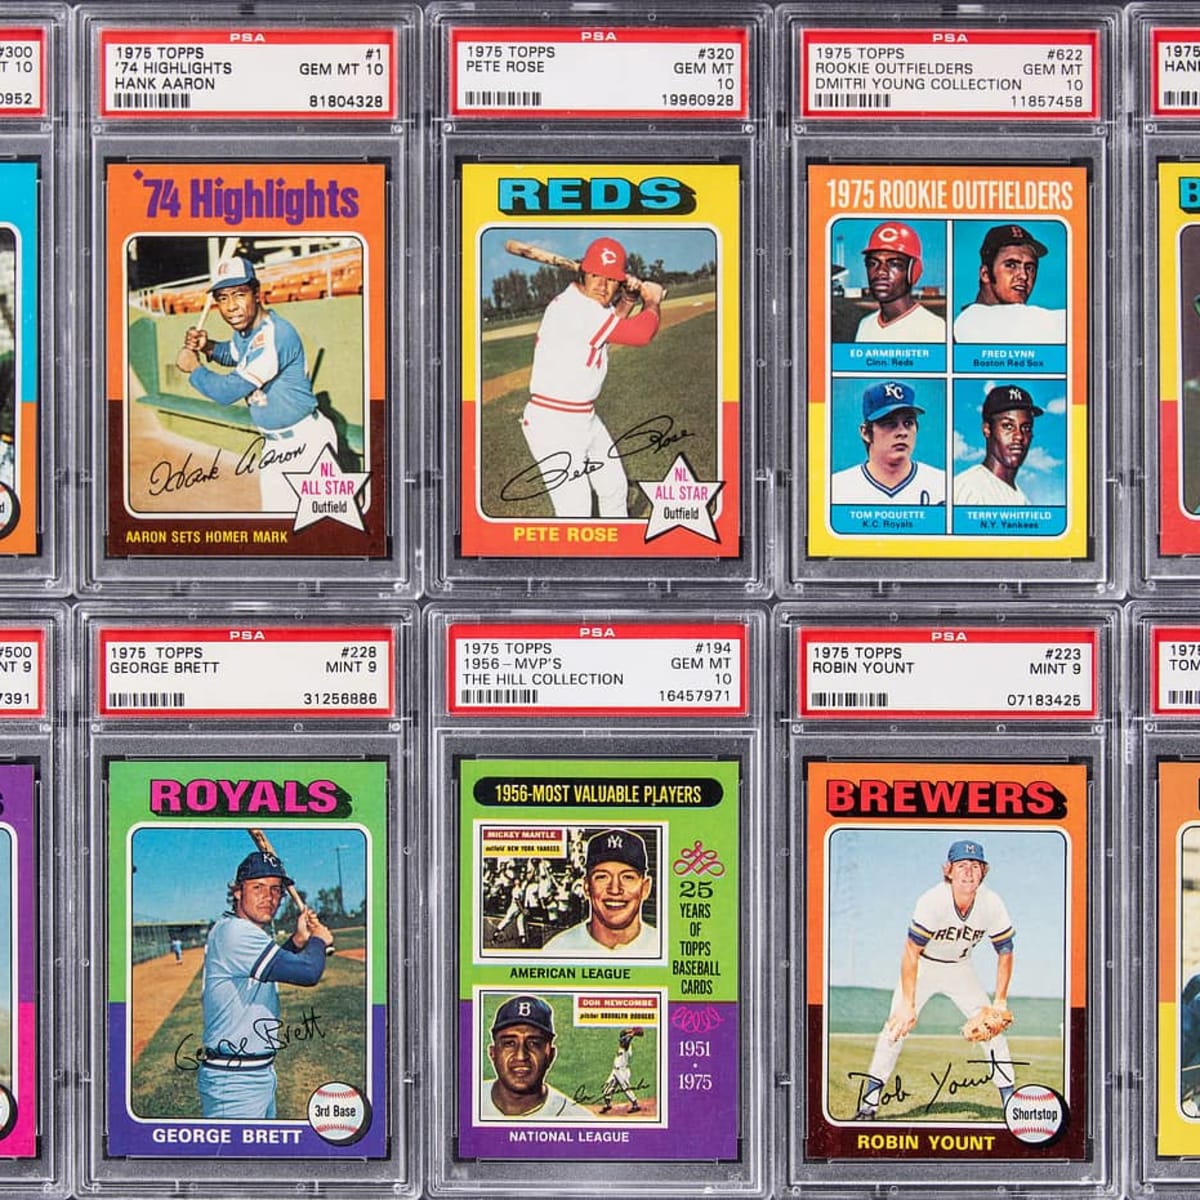 1975 Topps Regular (Baseball) Card# 660 Hank Aaron of the